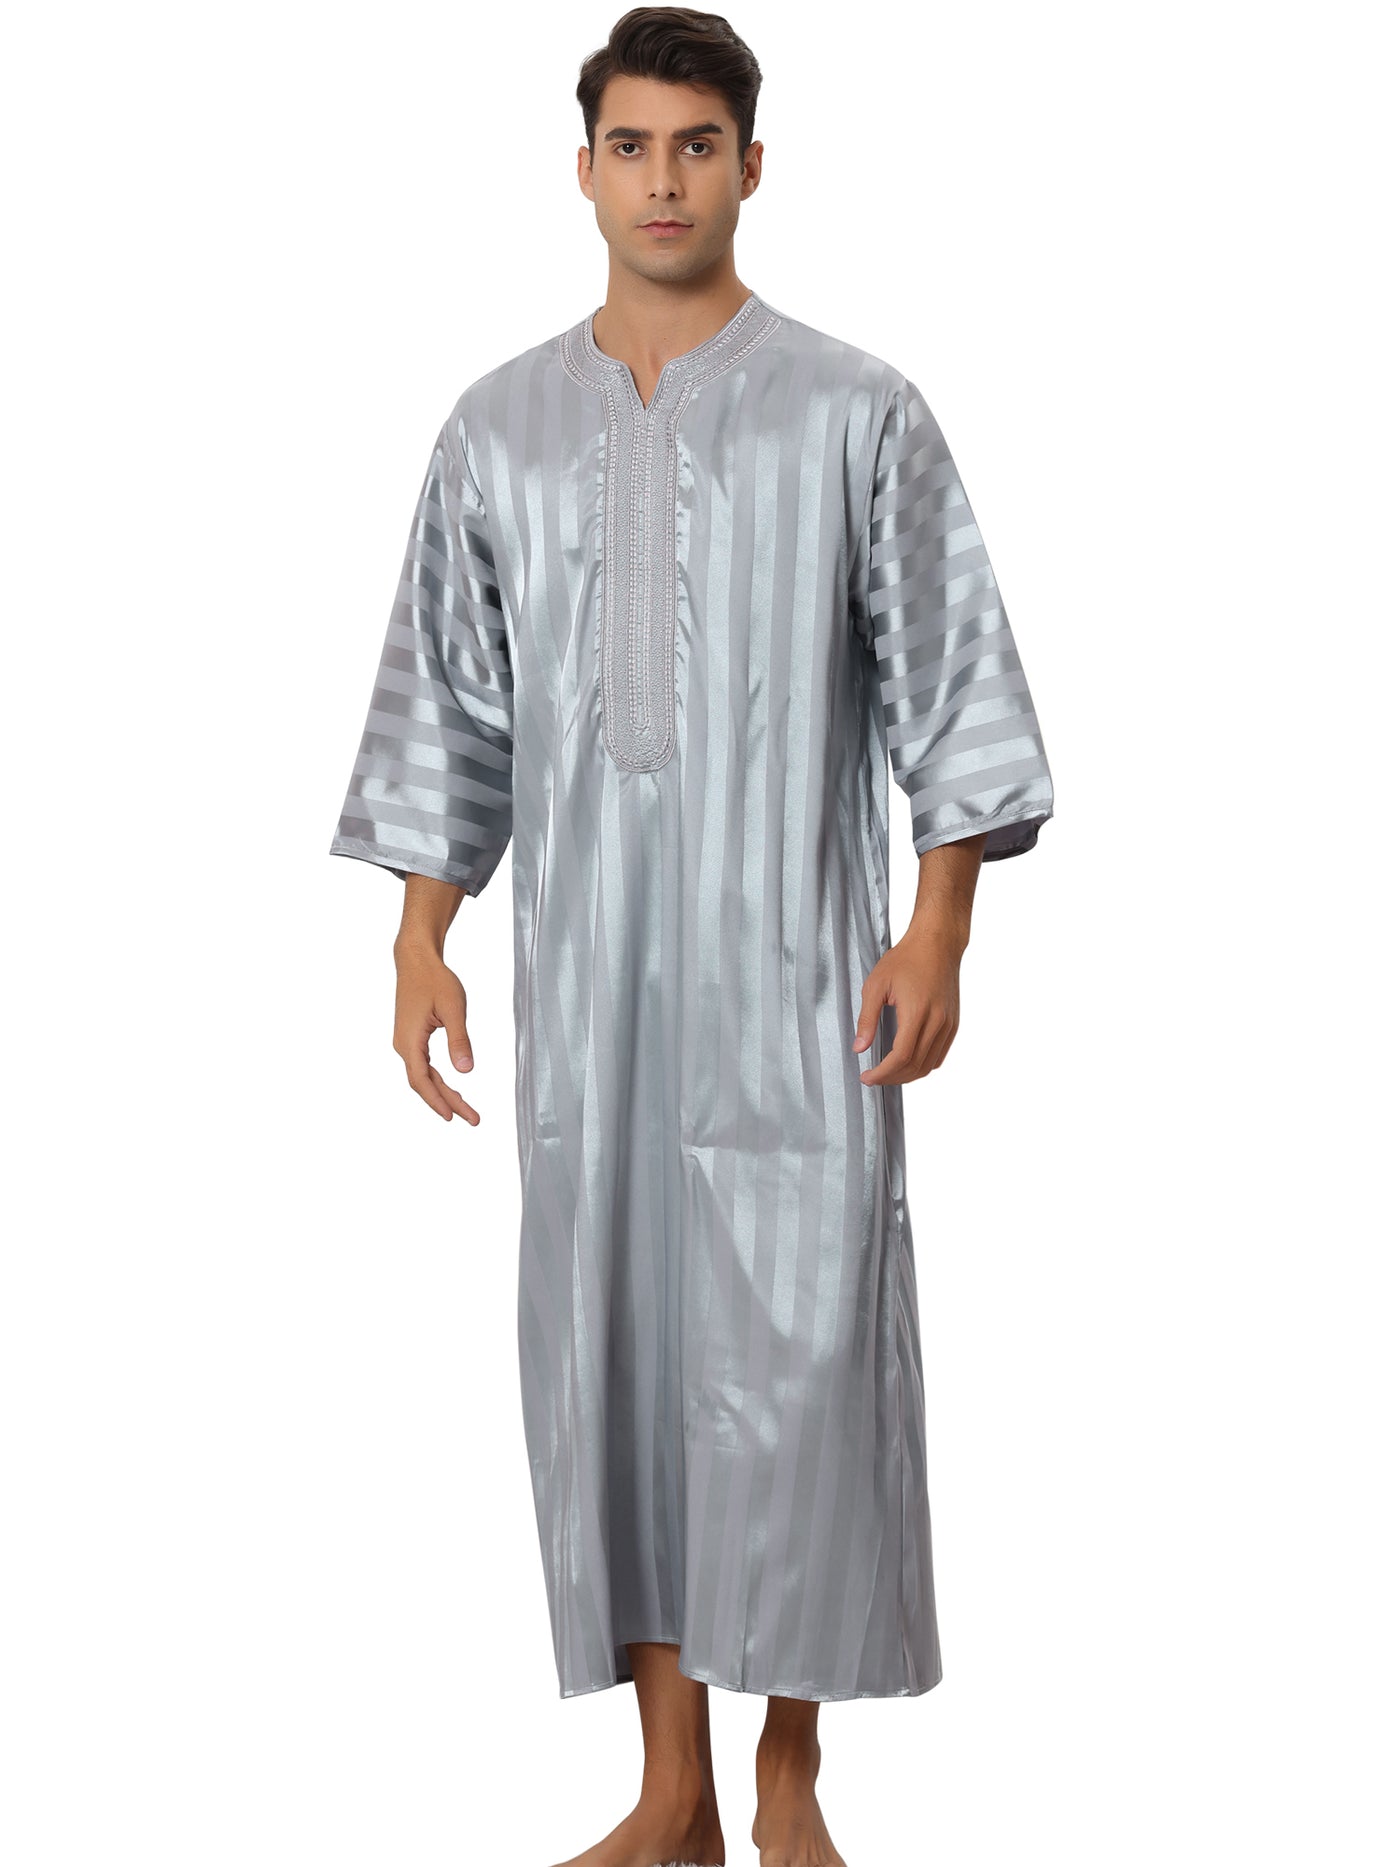 Bublédon Satin Striped Nightshirts for Men's 3/4 Sleeves V Neck Comfy Pajamas Sleepwear